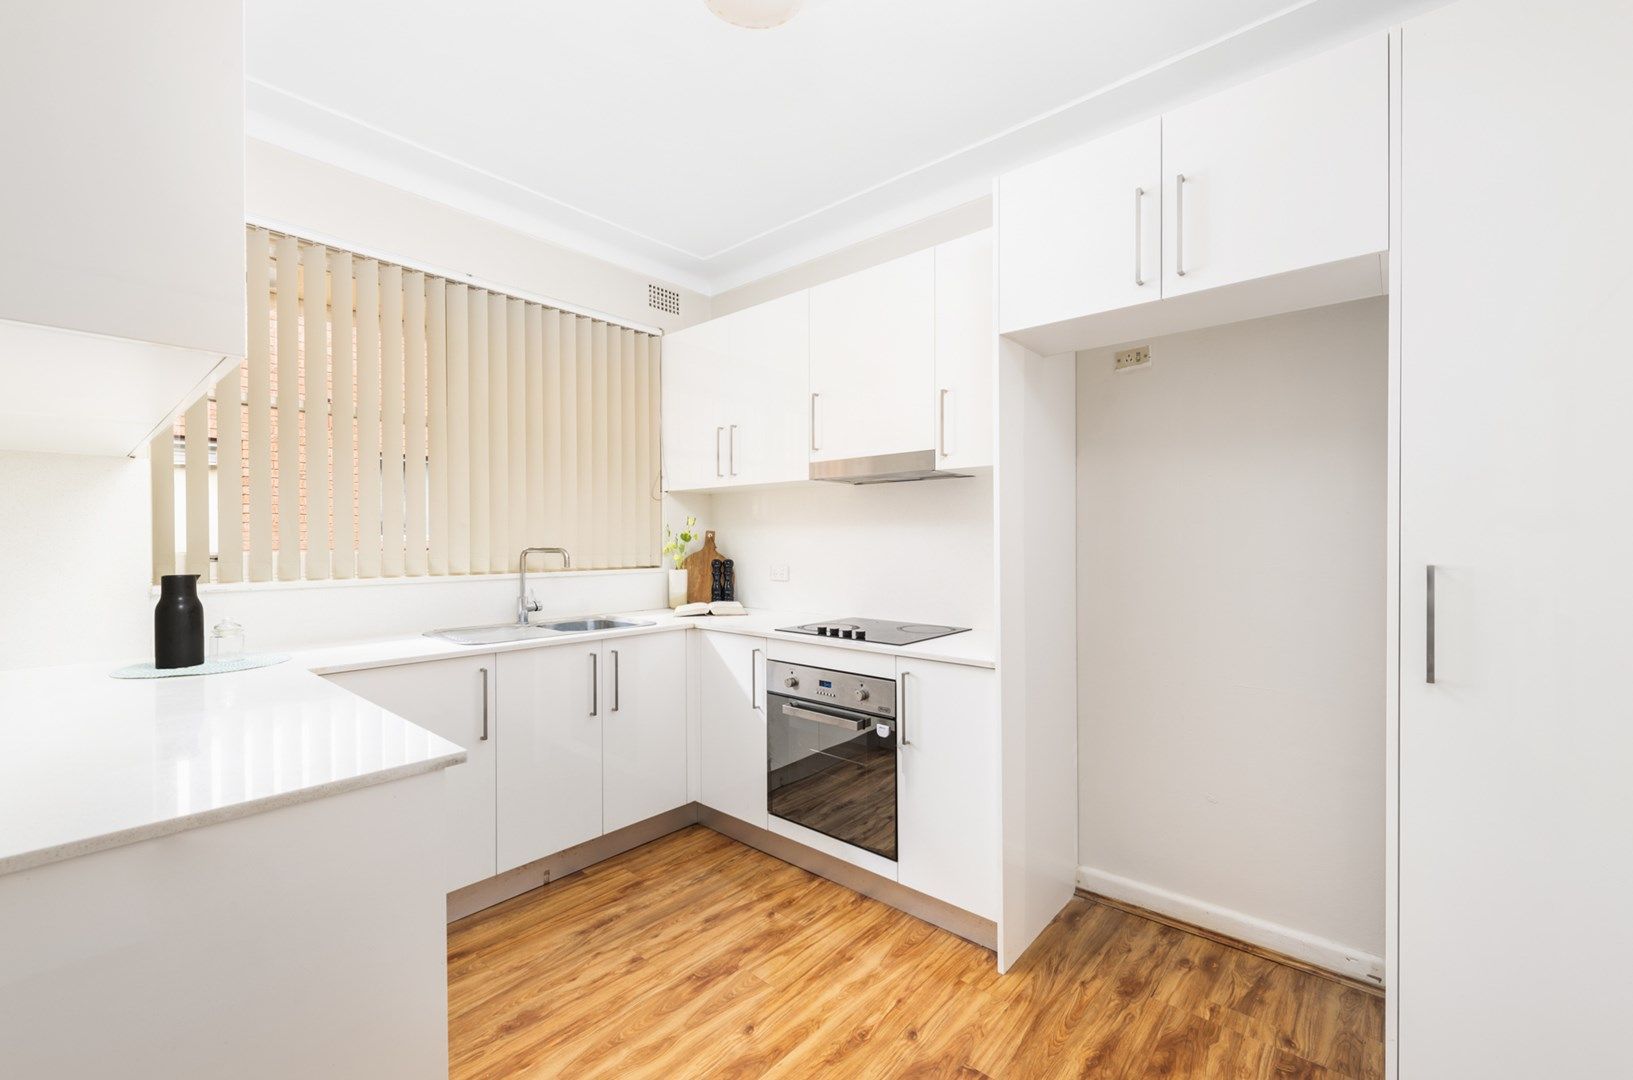 2 bedrooms Apartment / Unit / Flat in 5/10 Garfield Street CARLTON NSW, 2218